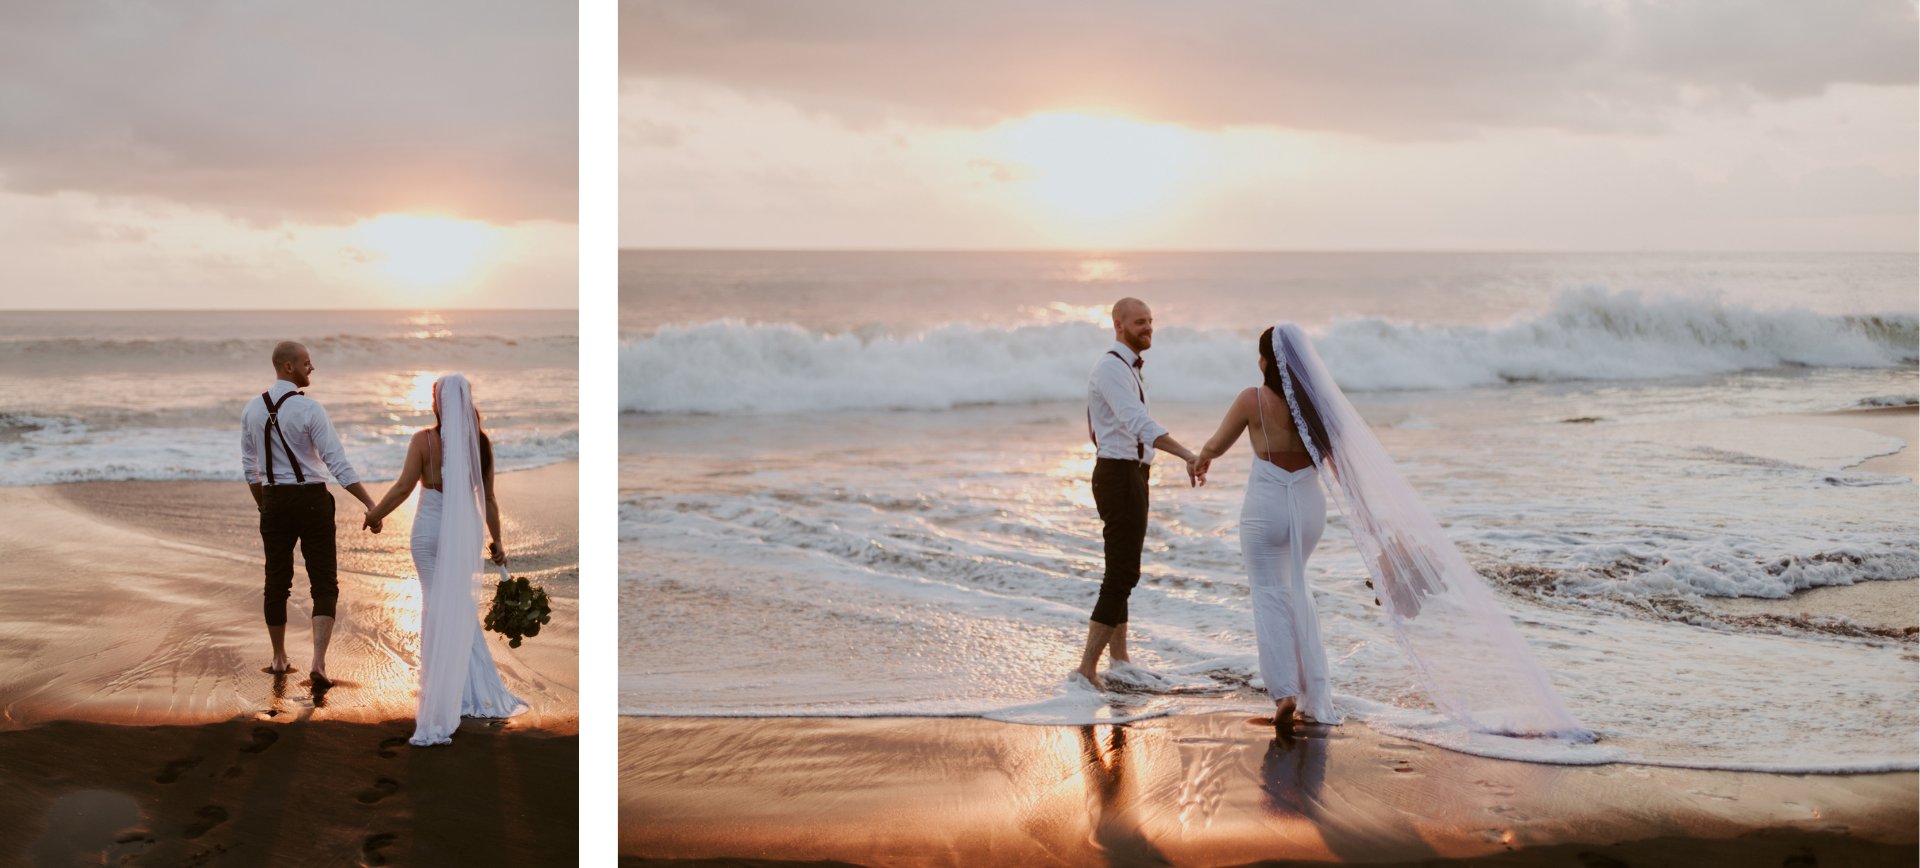 bali elopement - sunset wedding photoshoot